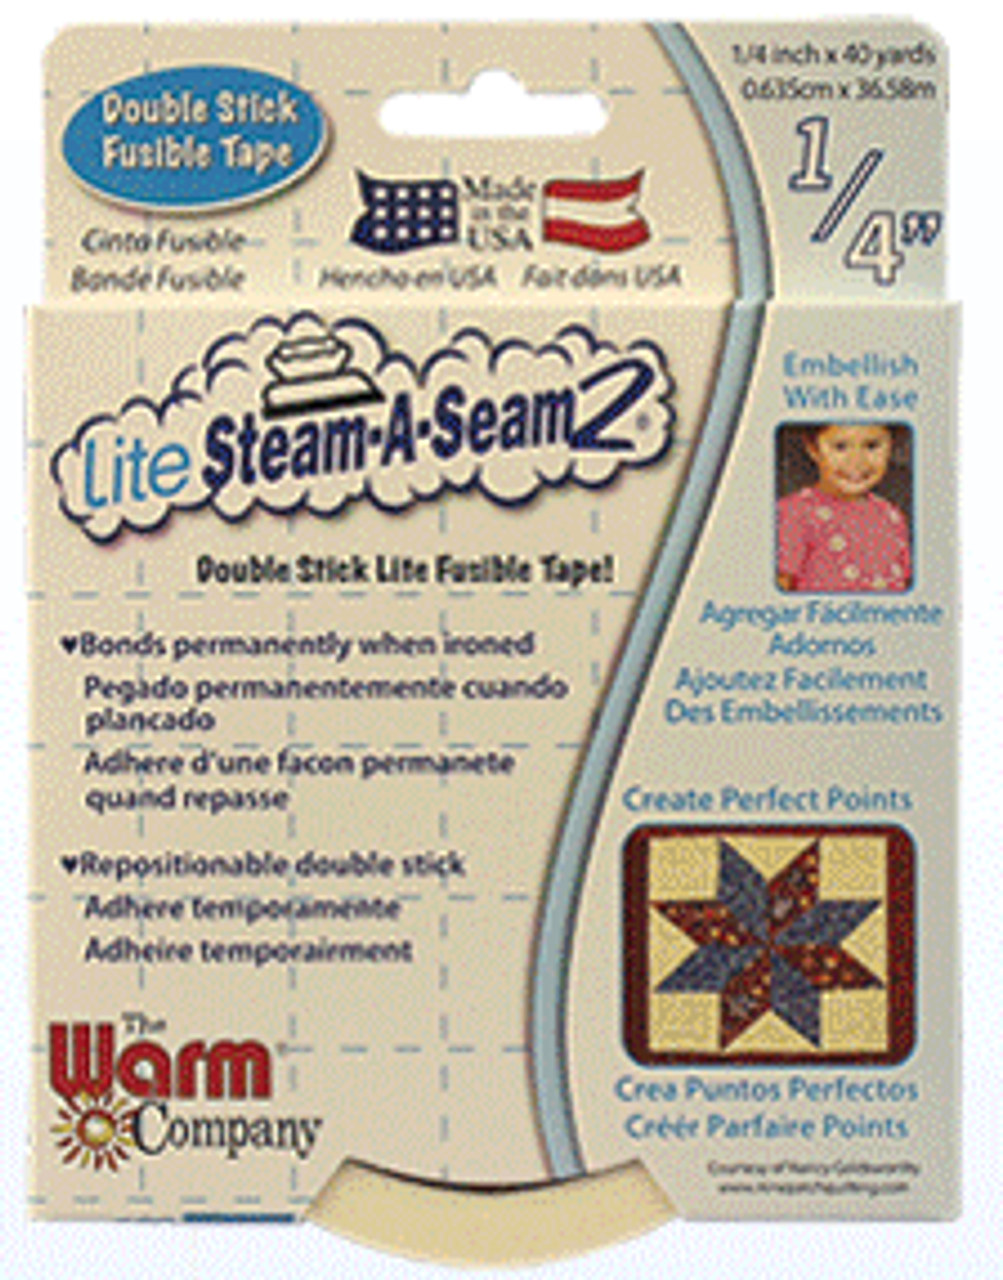 5 Pkgs Lite Steam-a-Seam 2 Double Stick Fusible Web by The Warm Company